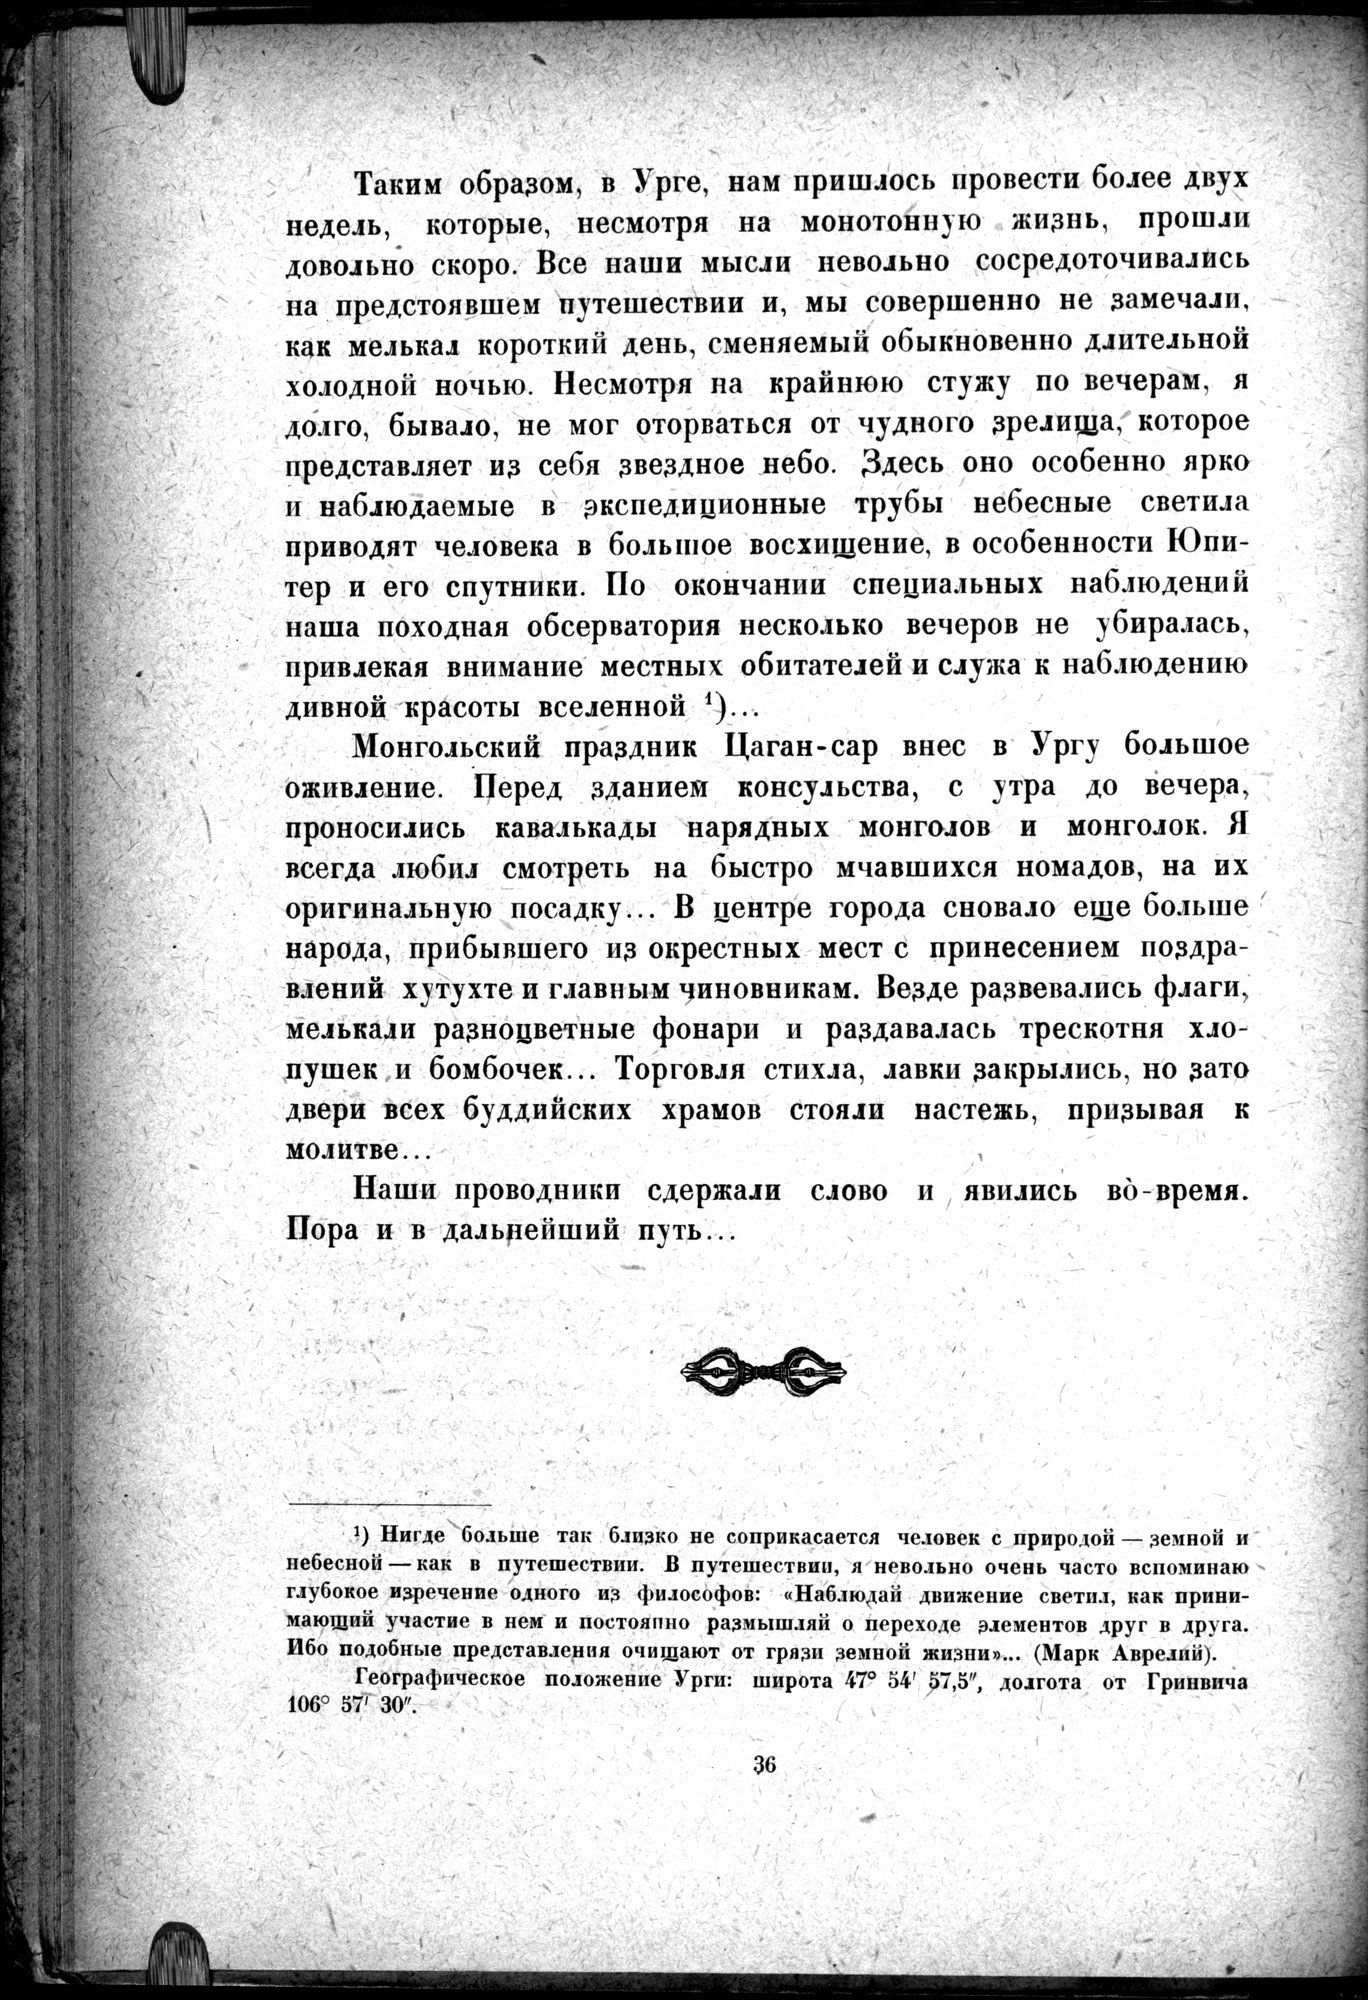 Mongoliya i Amdo i mertby gorod Khara-Khoto : vol.1 / Page 56 (Grayscale High Resolution Image)